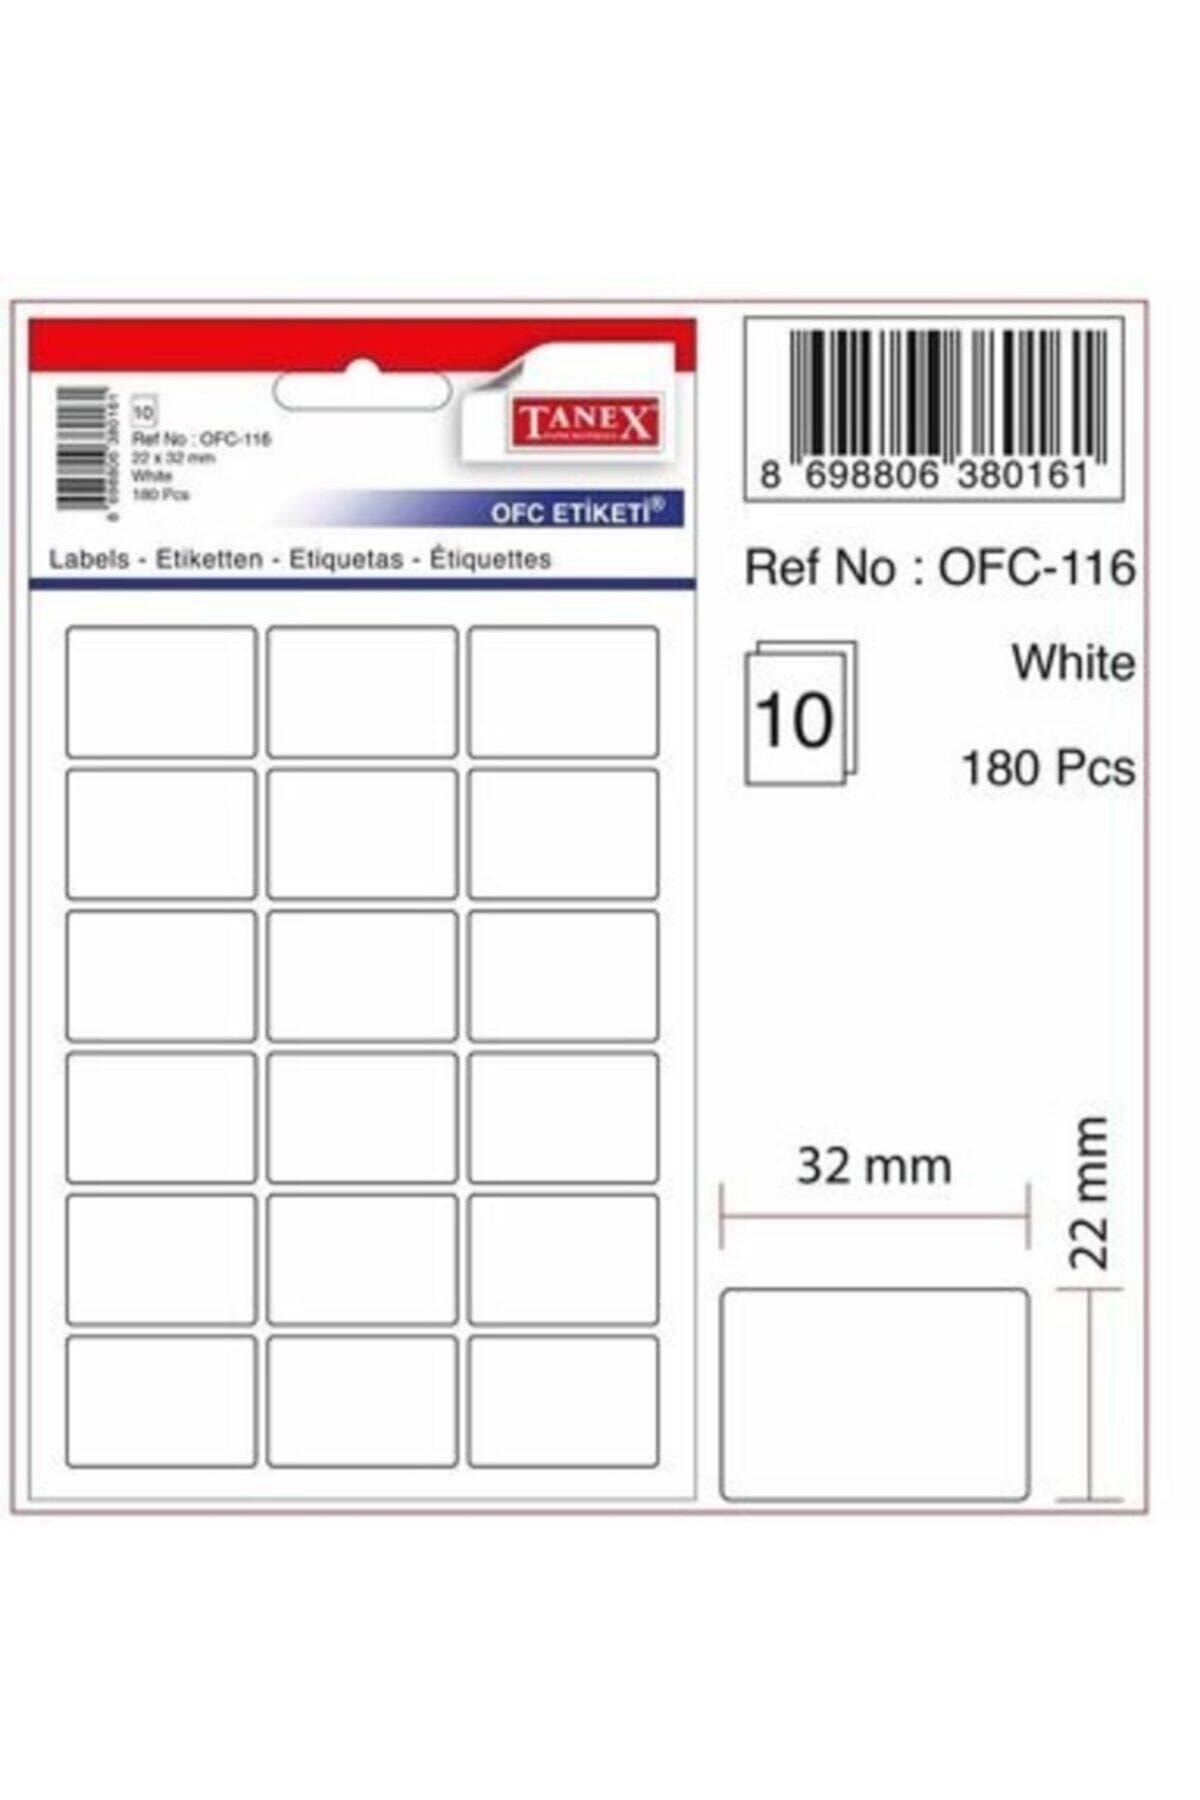 Tanex Ofc-116 22X32MM Beyaz Ofis Etiketi 180 Adet/Paket